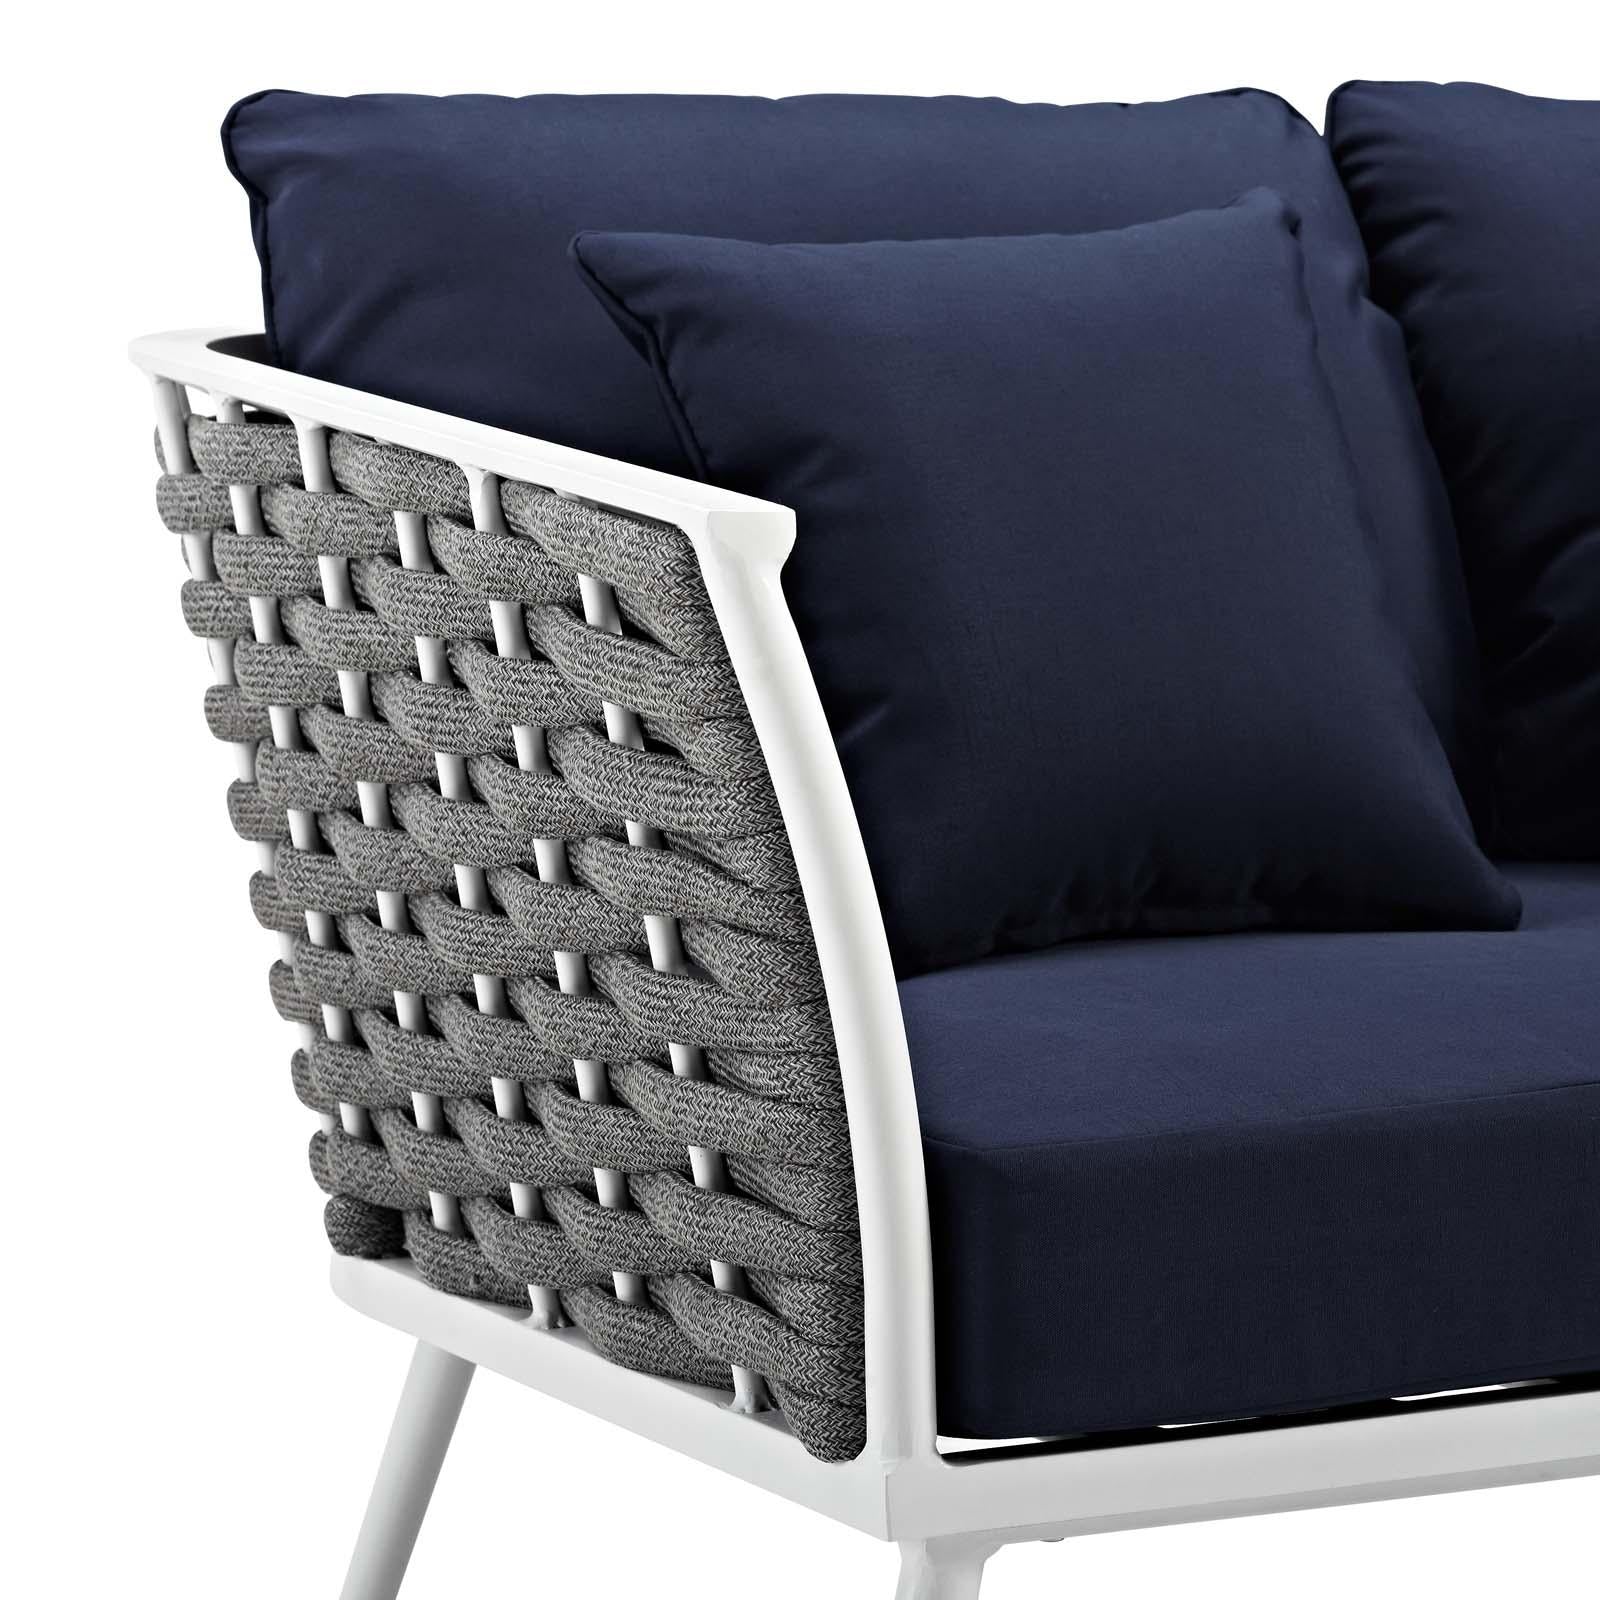 Modway Furniture Modern Stance Outdoor Patio Aluminum Sofa - EEI-3020